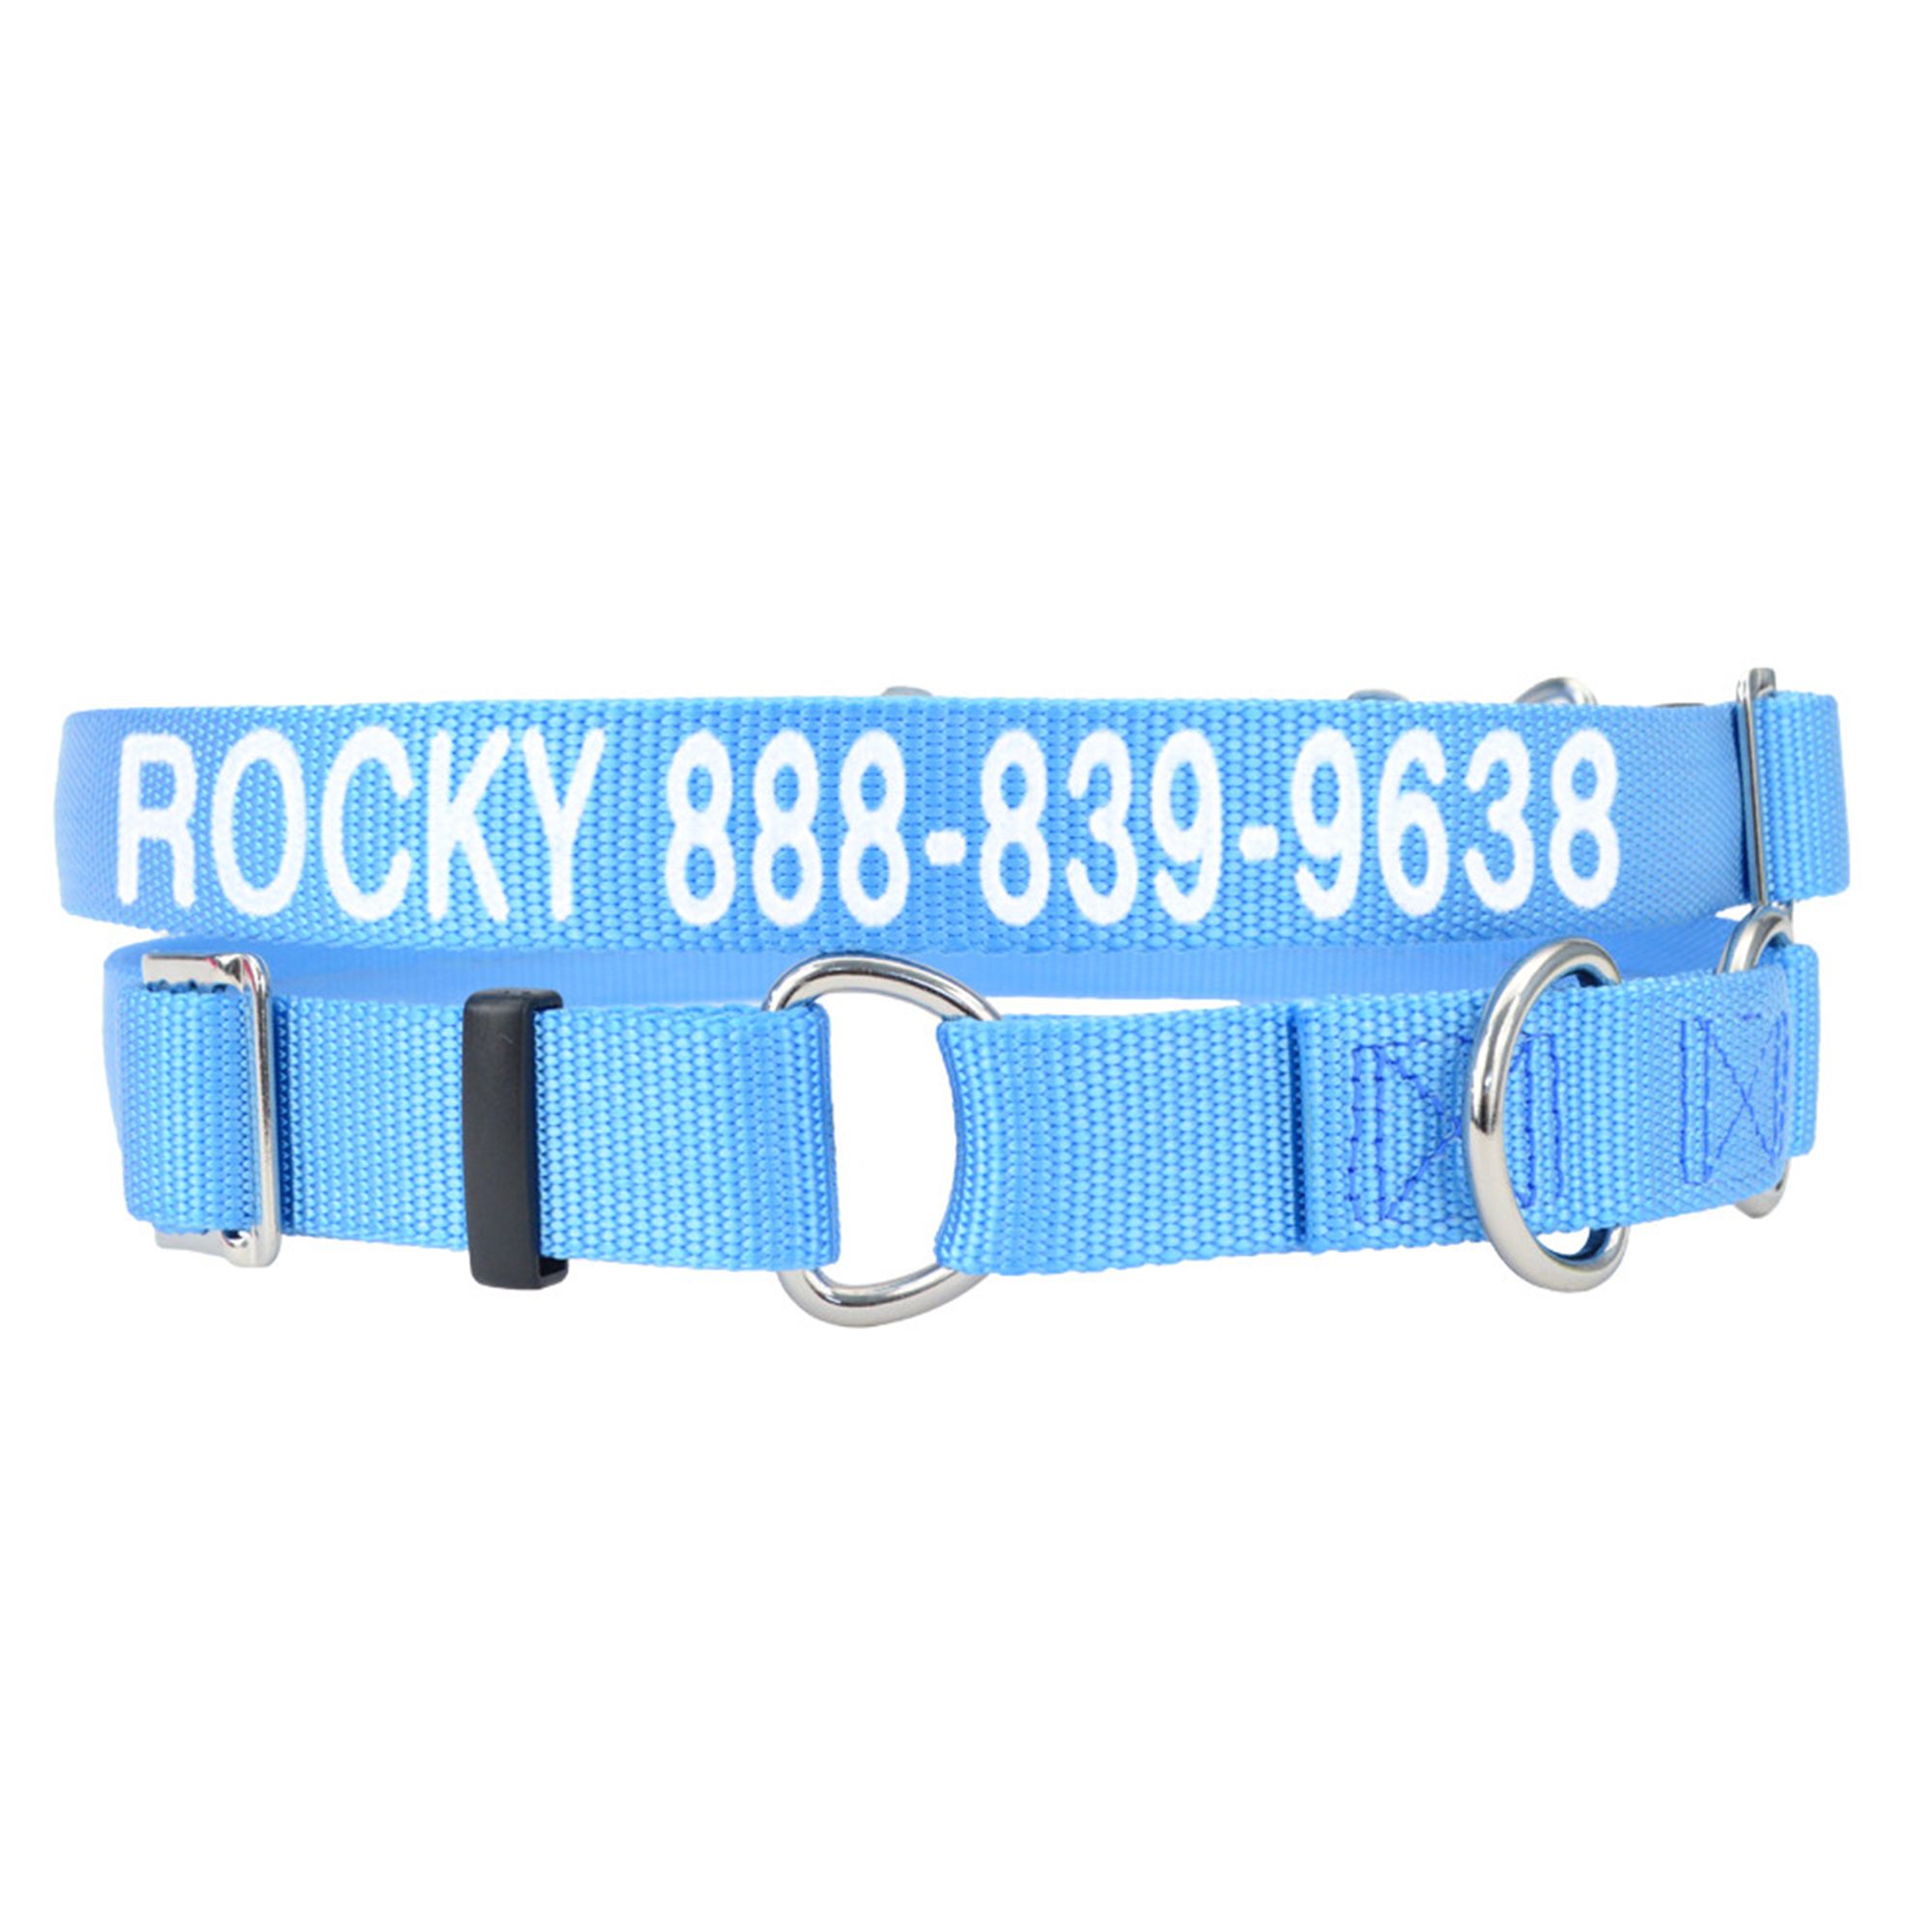 Coastal Pet No Slip Personalized Dog Collar in Light Blue, 5/8 Width